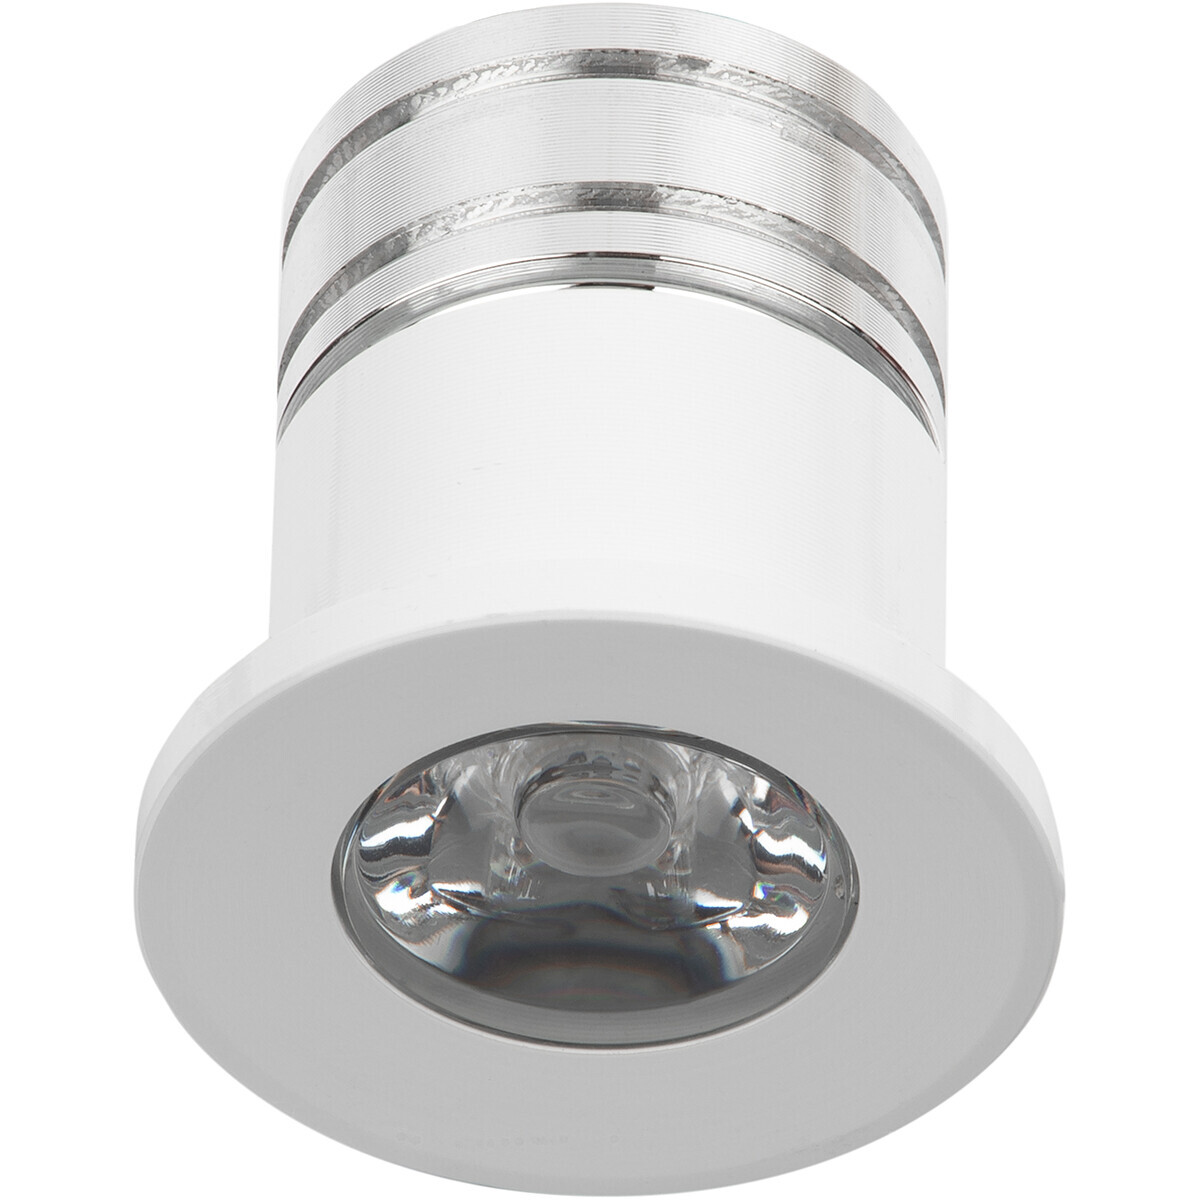 Velvalux LED Veranda Spot Verlichting - 3W - Warm Wit 3000K - Inbouw - Dimbaar - Rond - Mat Wit - Aluminium - Ø31mm